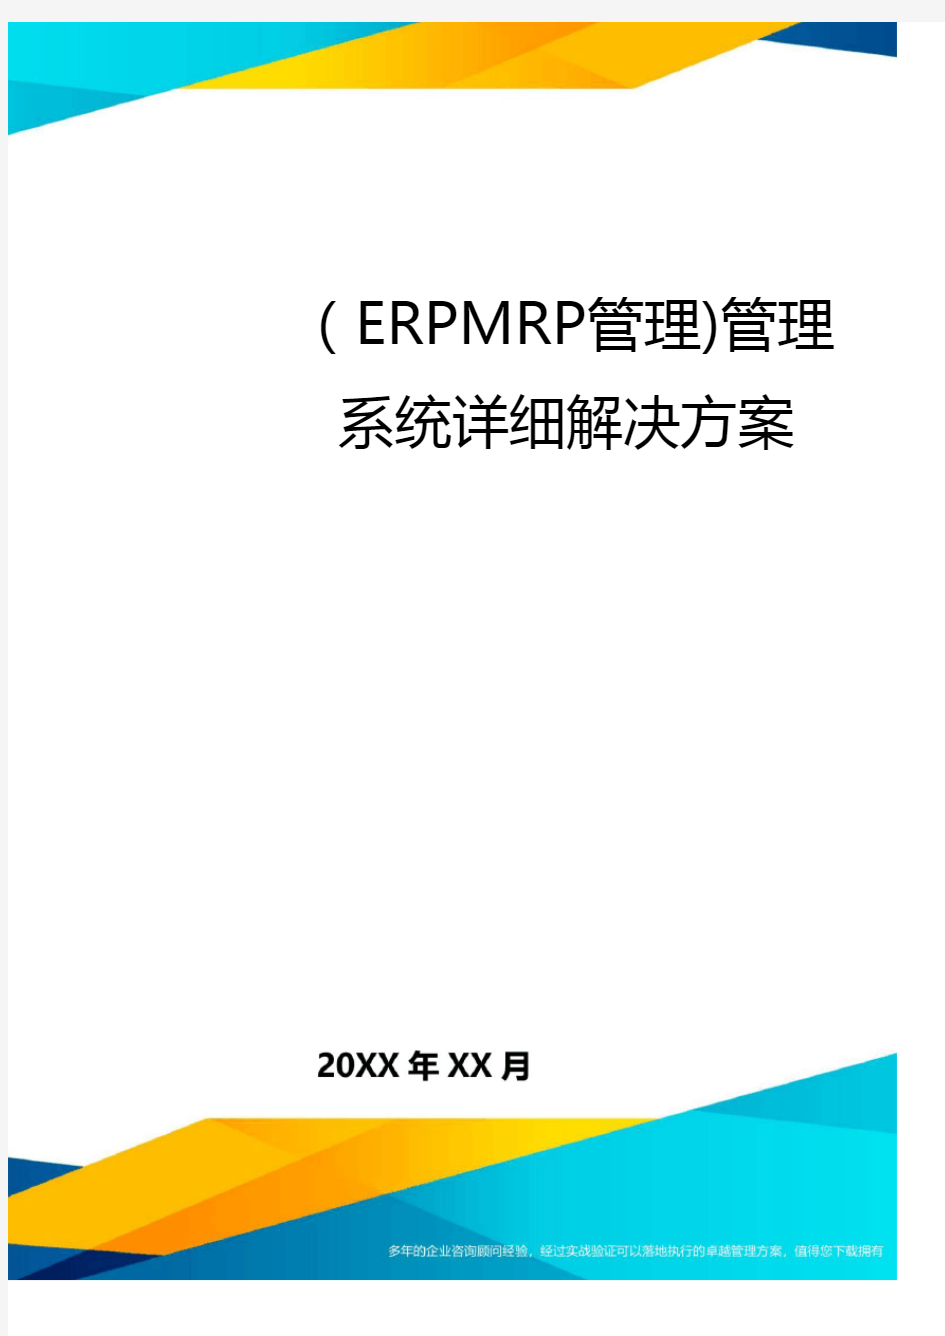 (ERPMRP管理)管理系统详细解决方案最全版